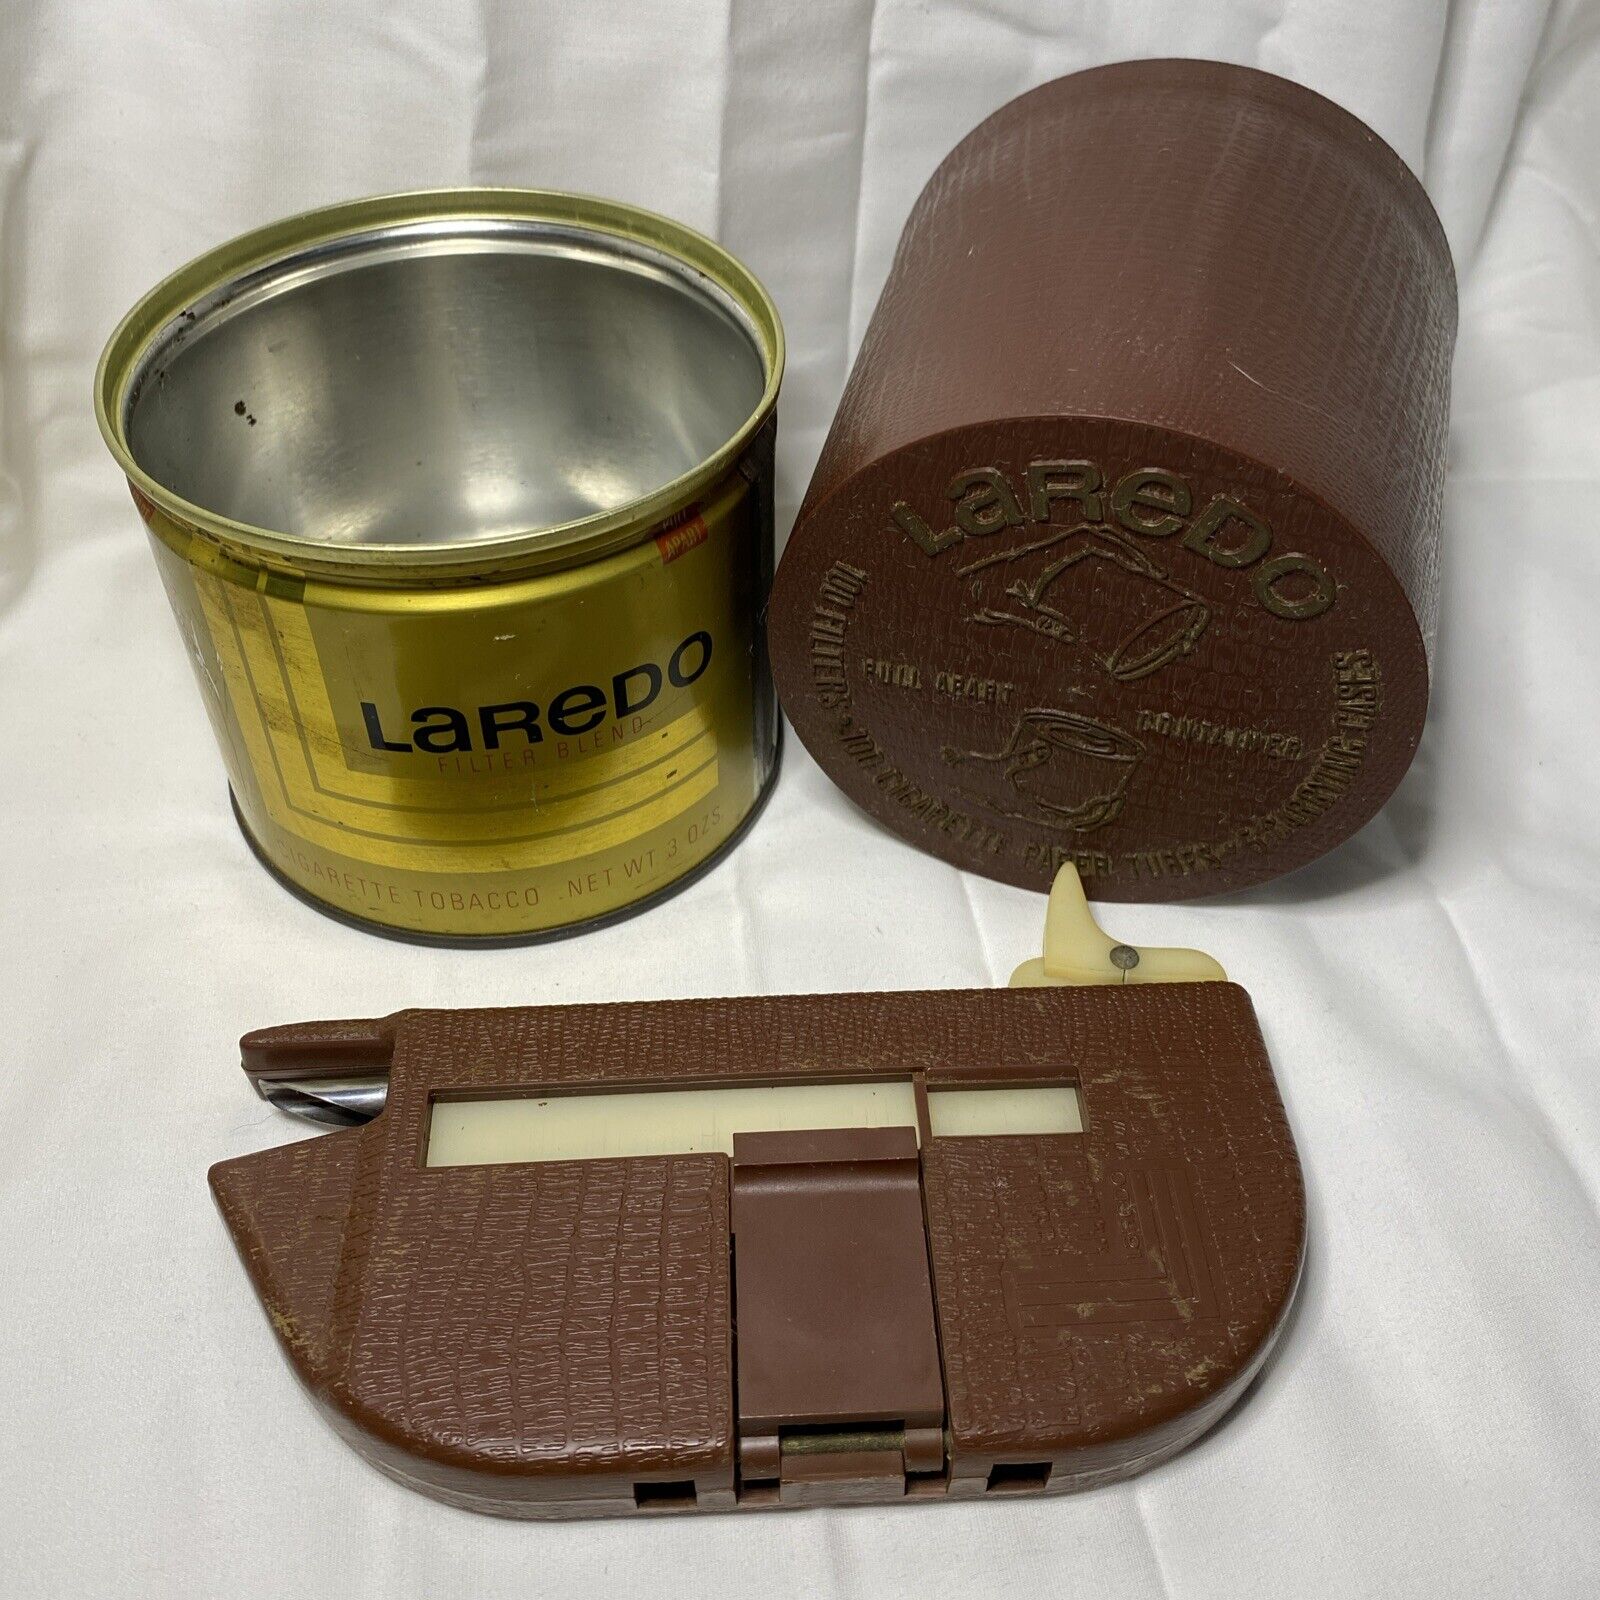 Vintage Laredo Brown & Williamson Filter Cigarette Maker and Empty Can